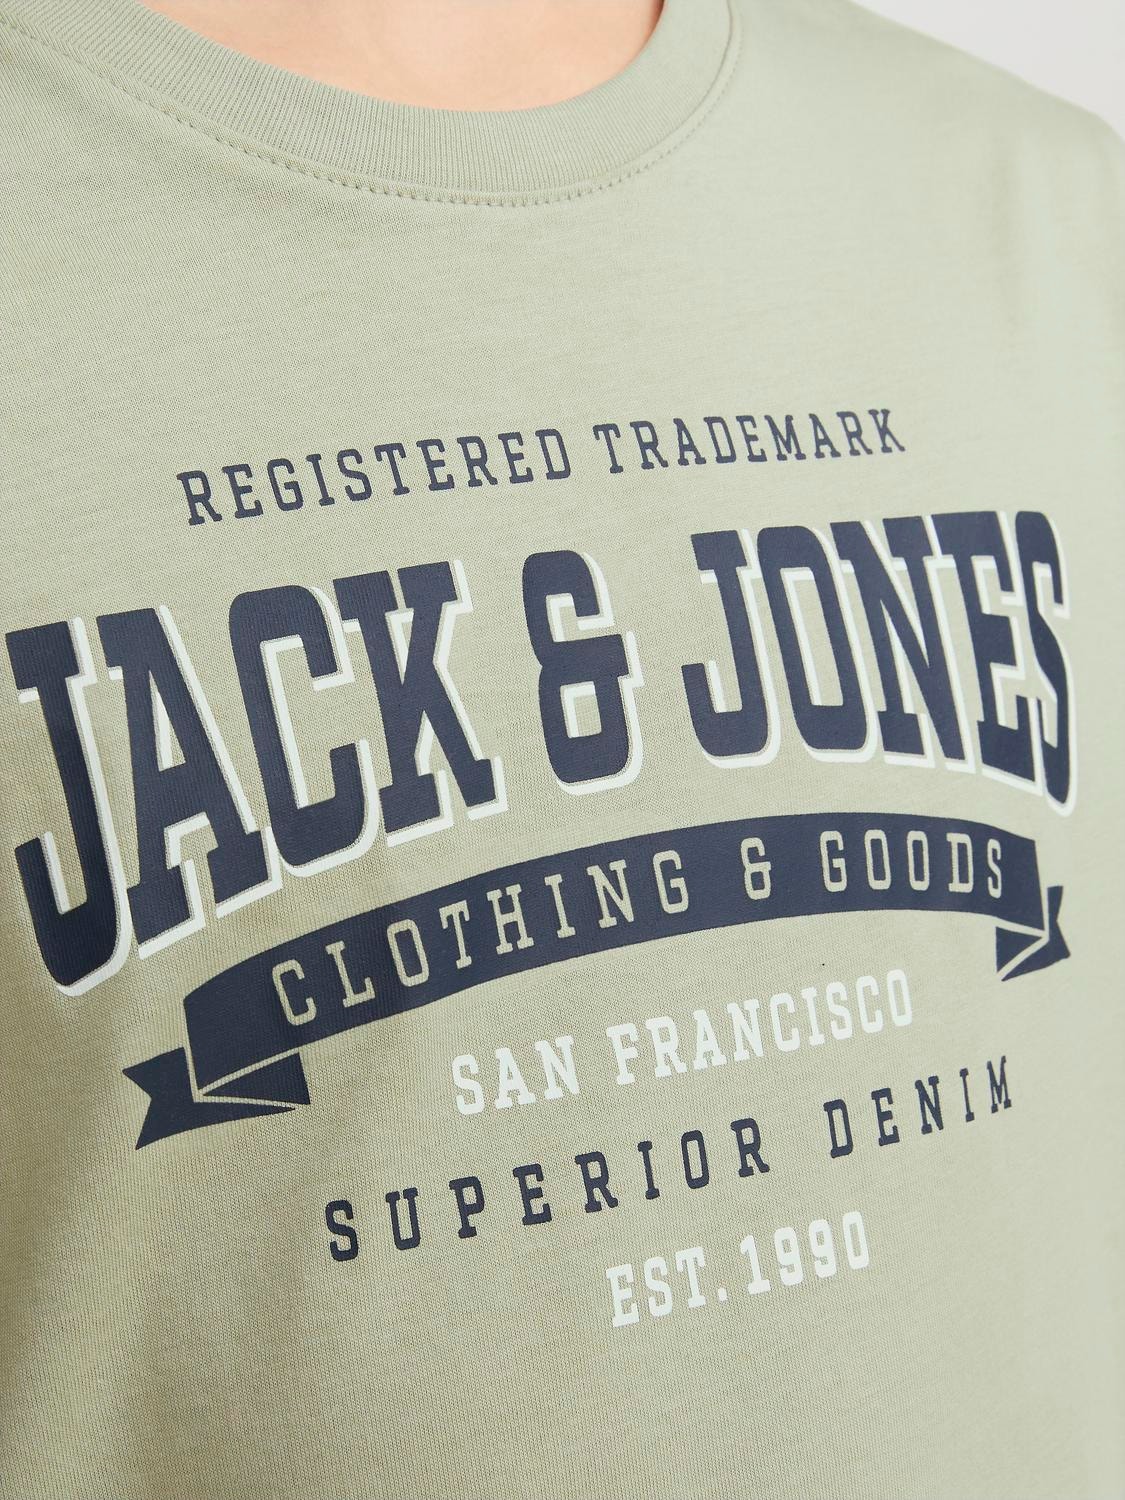 Jack & Jones Gedruckt T-shirt Für jungs -Desert Sage - 12237367